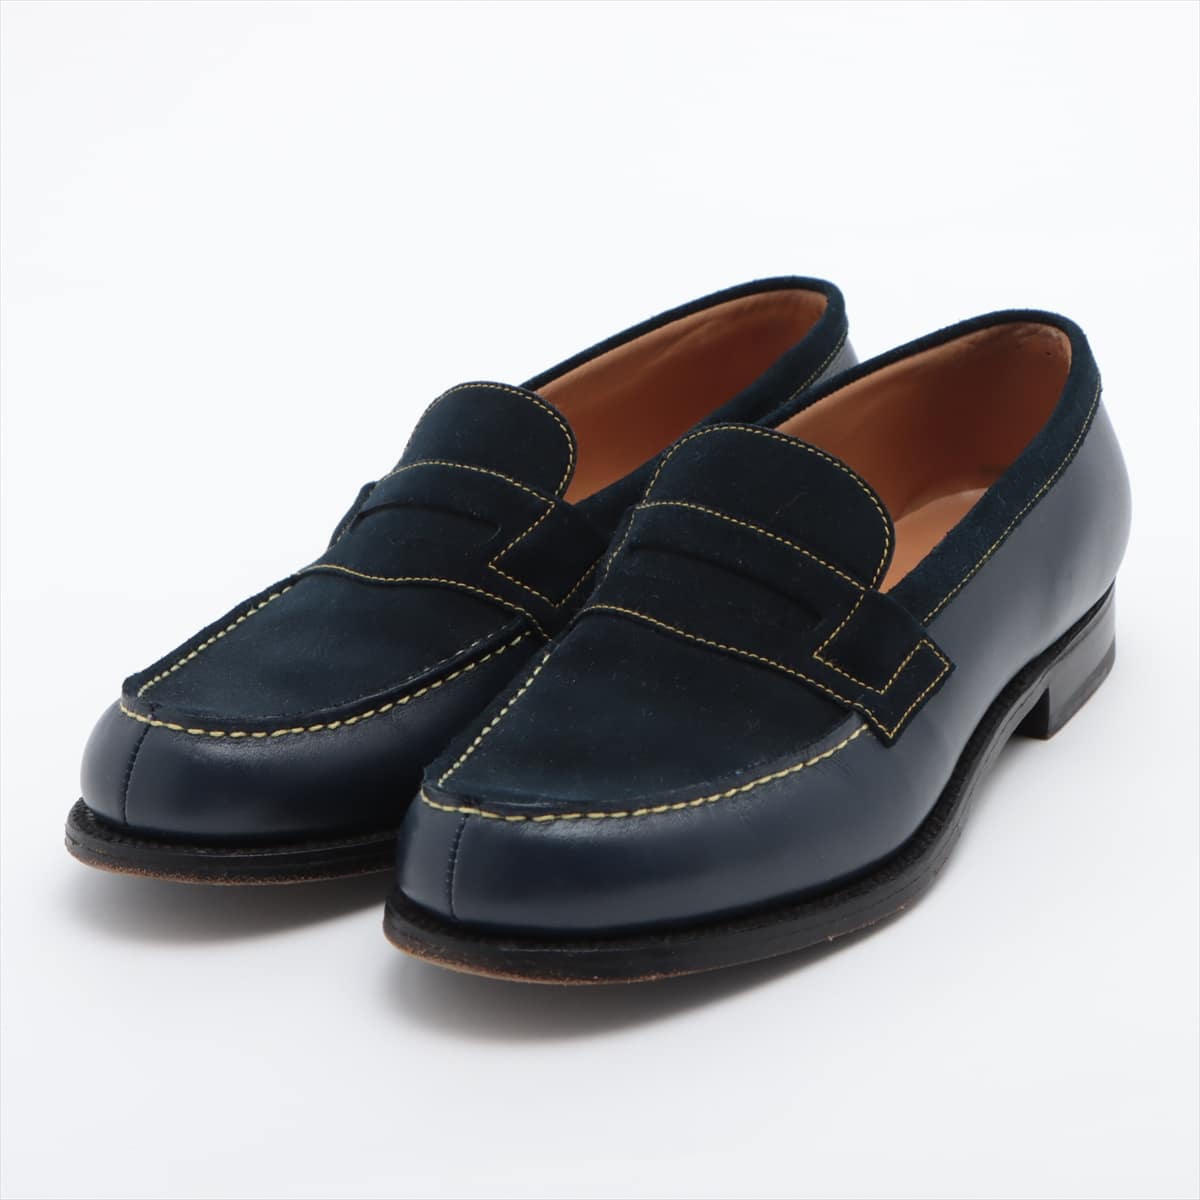 J. M. Weston Suede & leather Loafer 5D Ladies' Navy blue